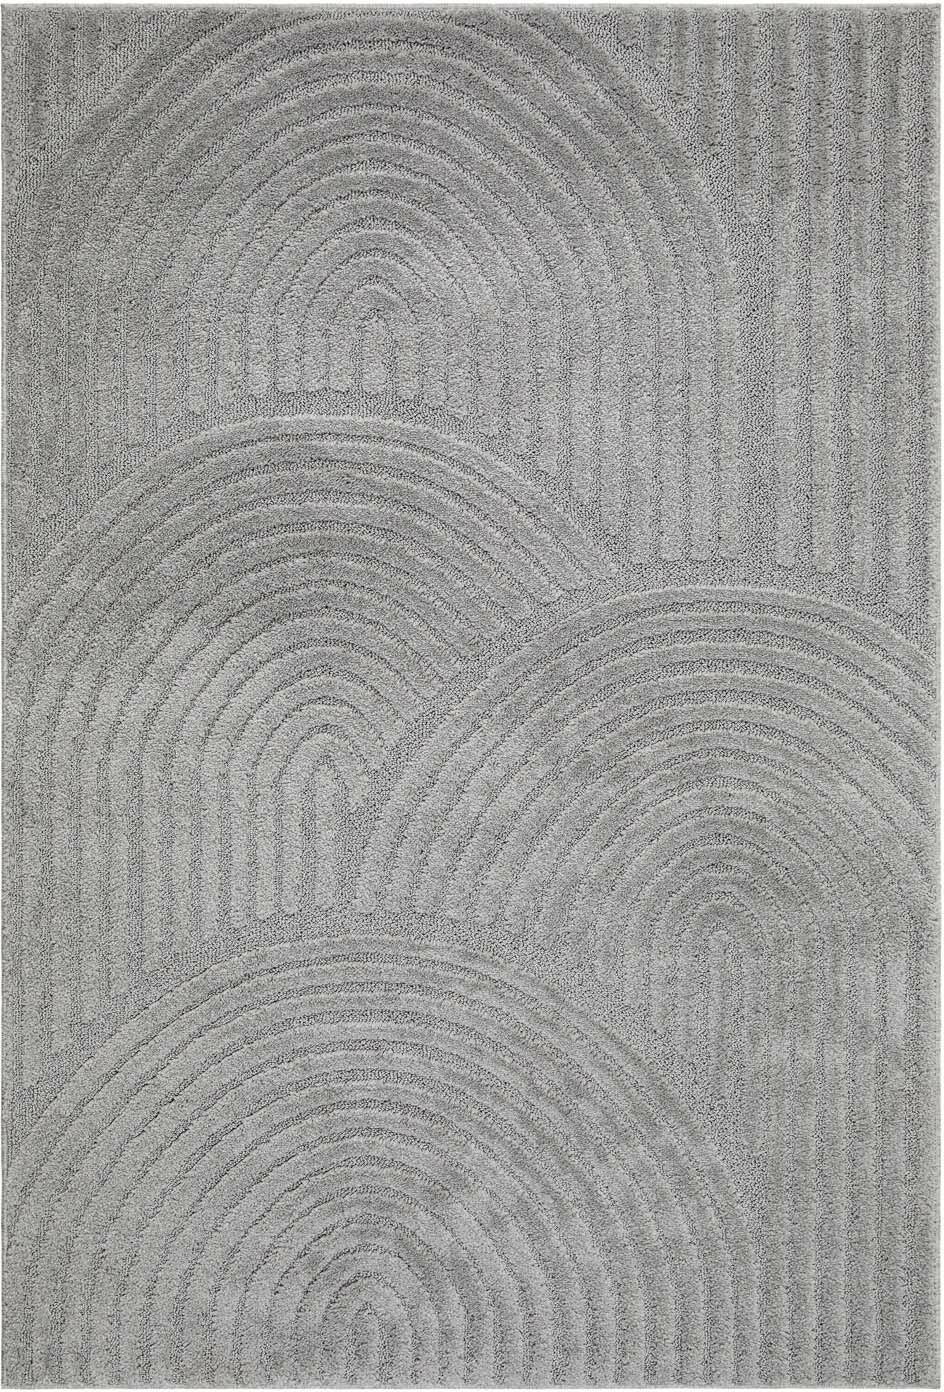 KMCarpets Doria Zen Teppich 120x170 cm, Grau von KMCarpets